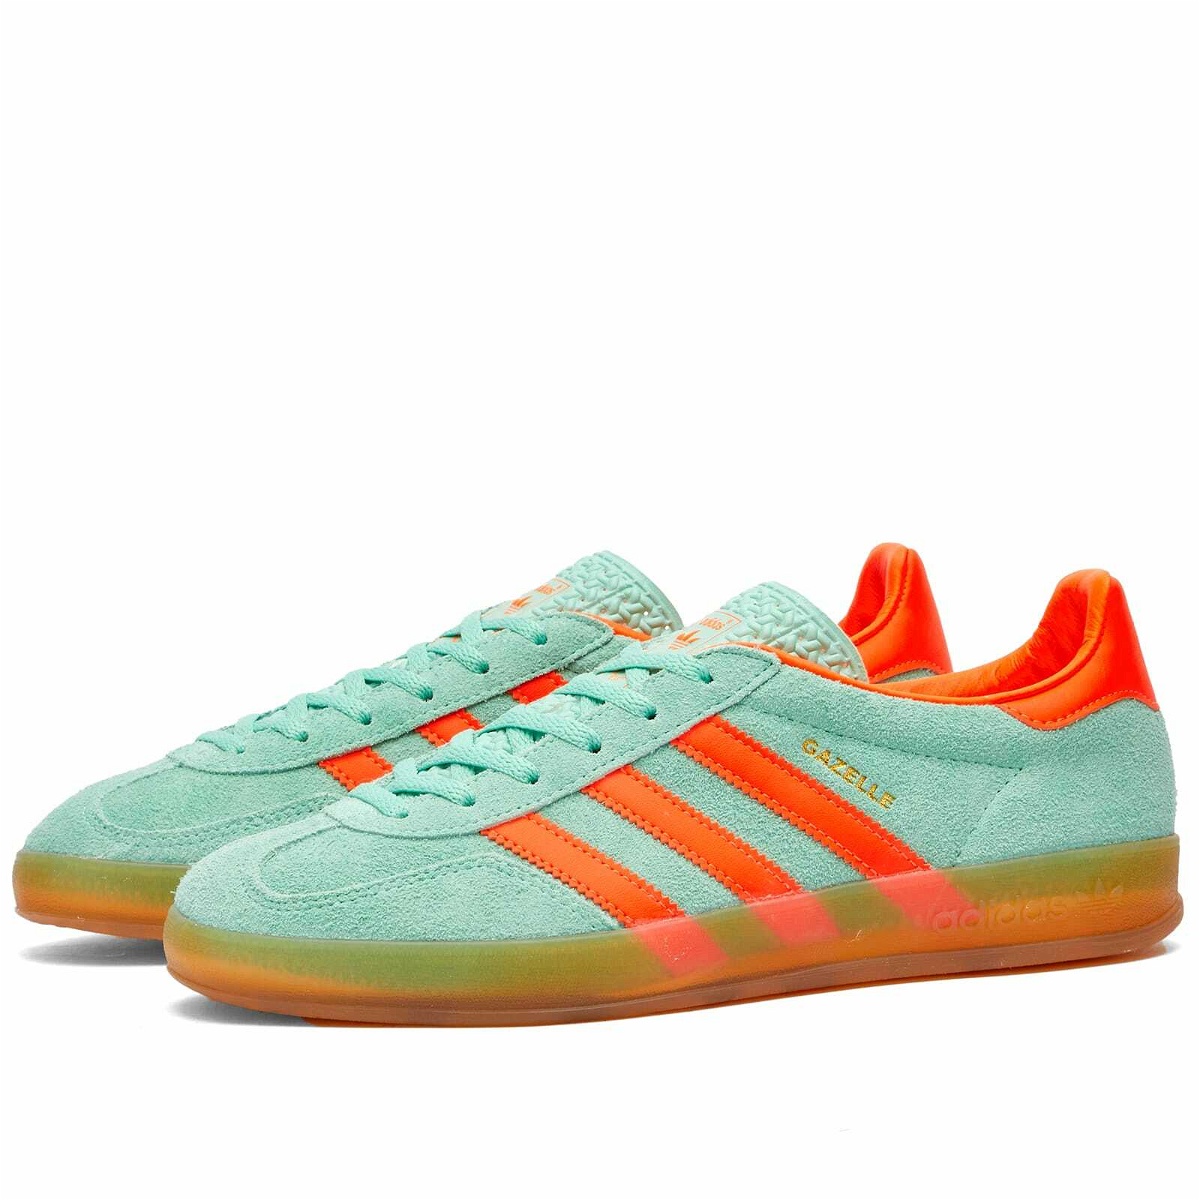 Adidas Gazelle Indoor adidas Mint/Orange in Sneakers W Pulse